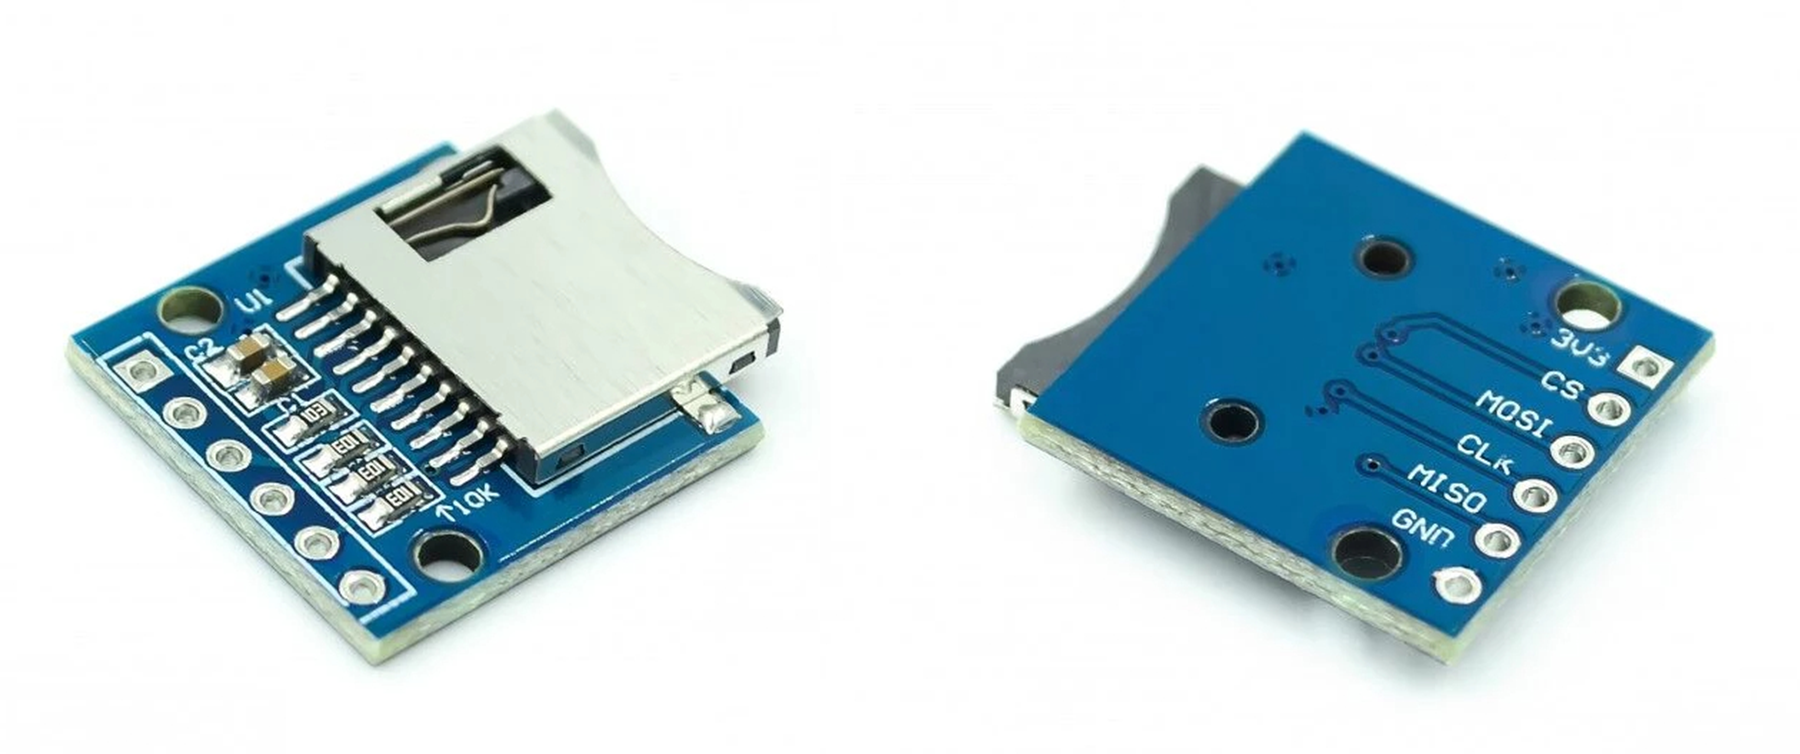 Smaller MicroSD SPI expansion board